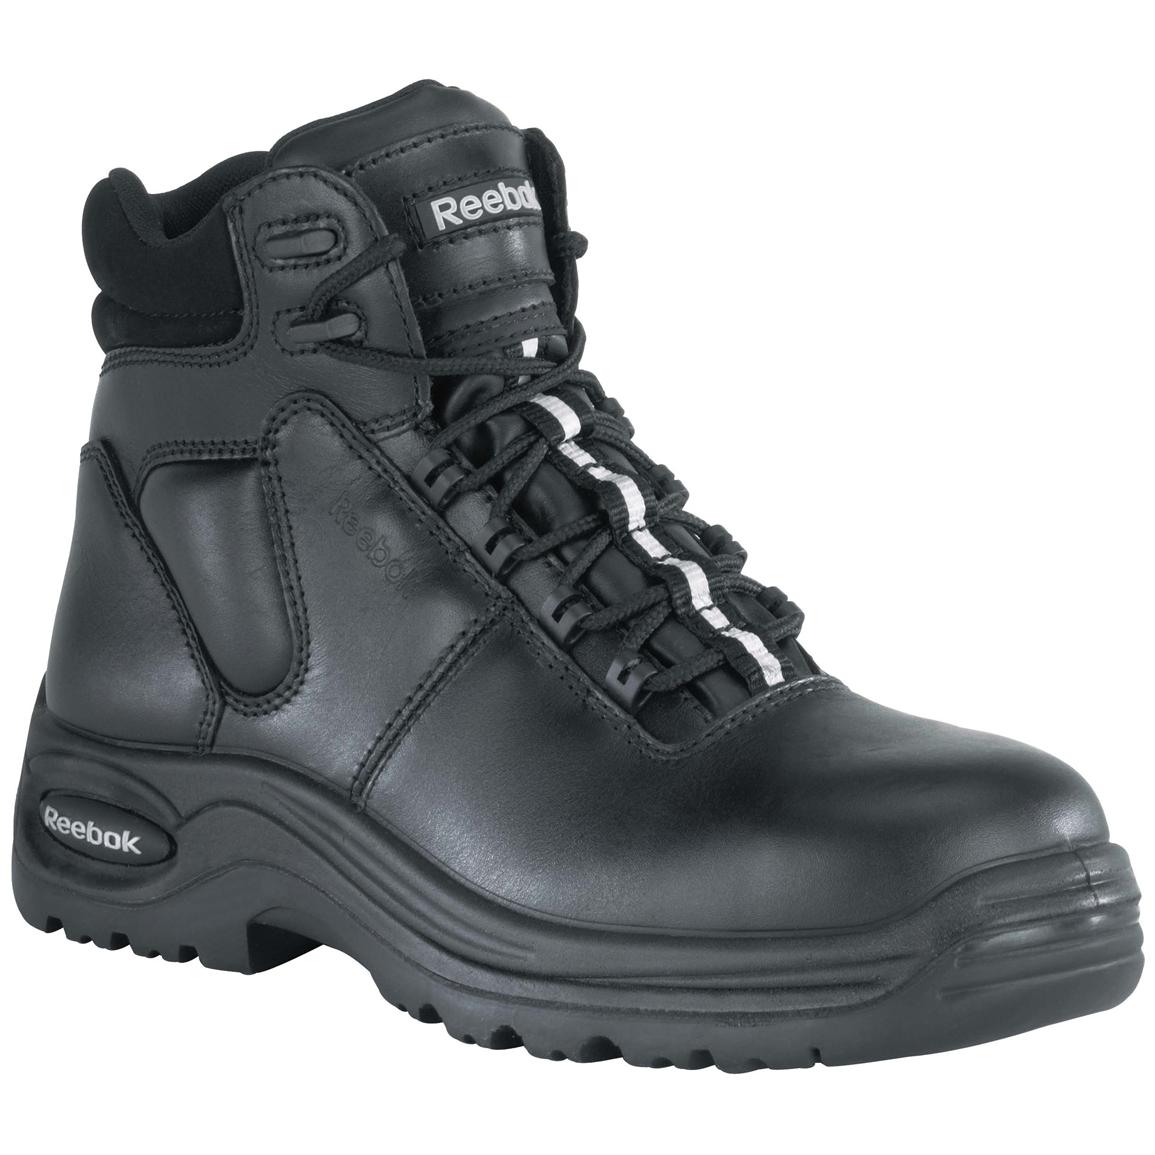 Women's Reebok® Composite Toe 6 inch Sport Boots, Black